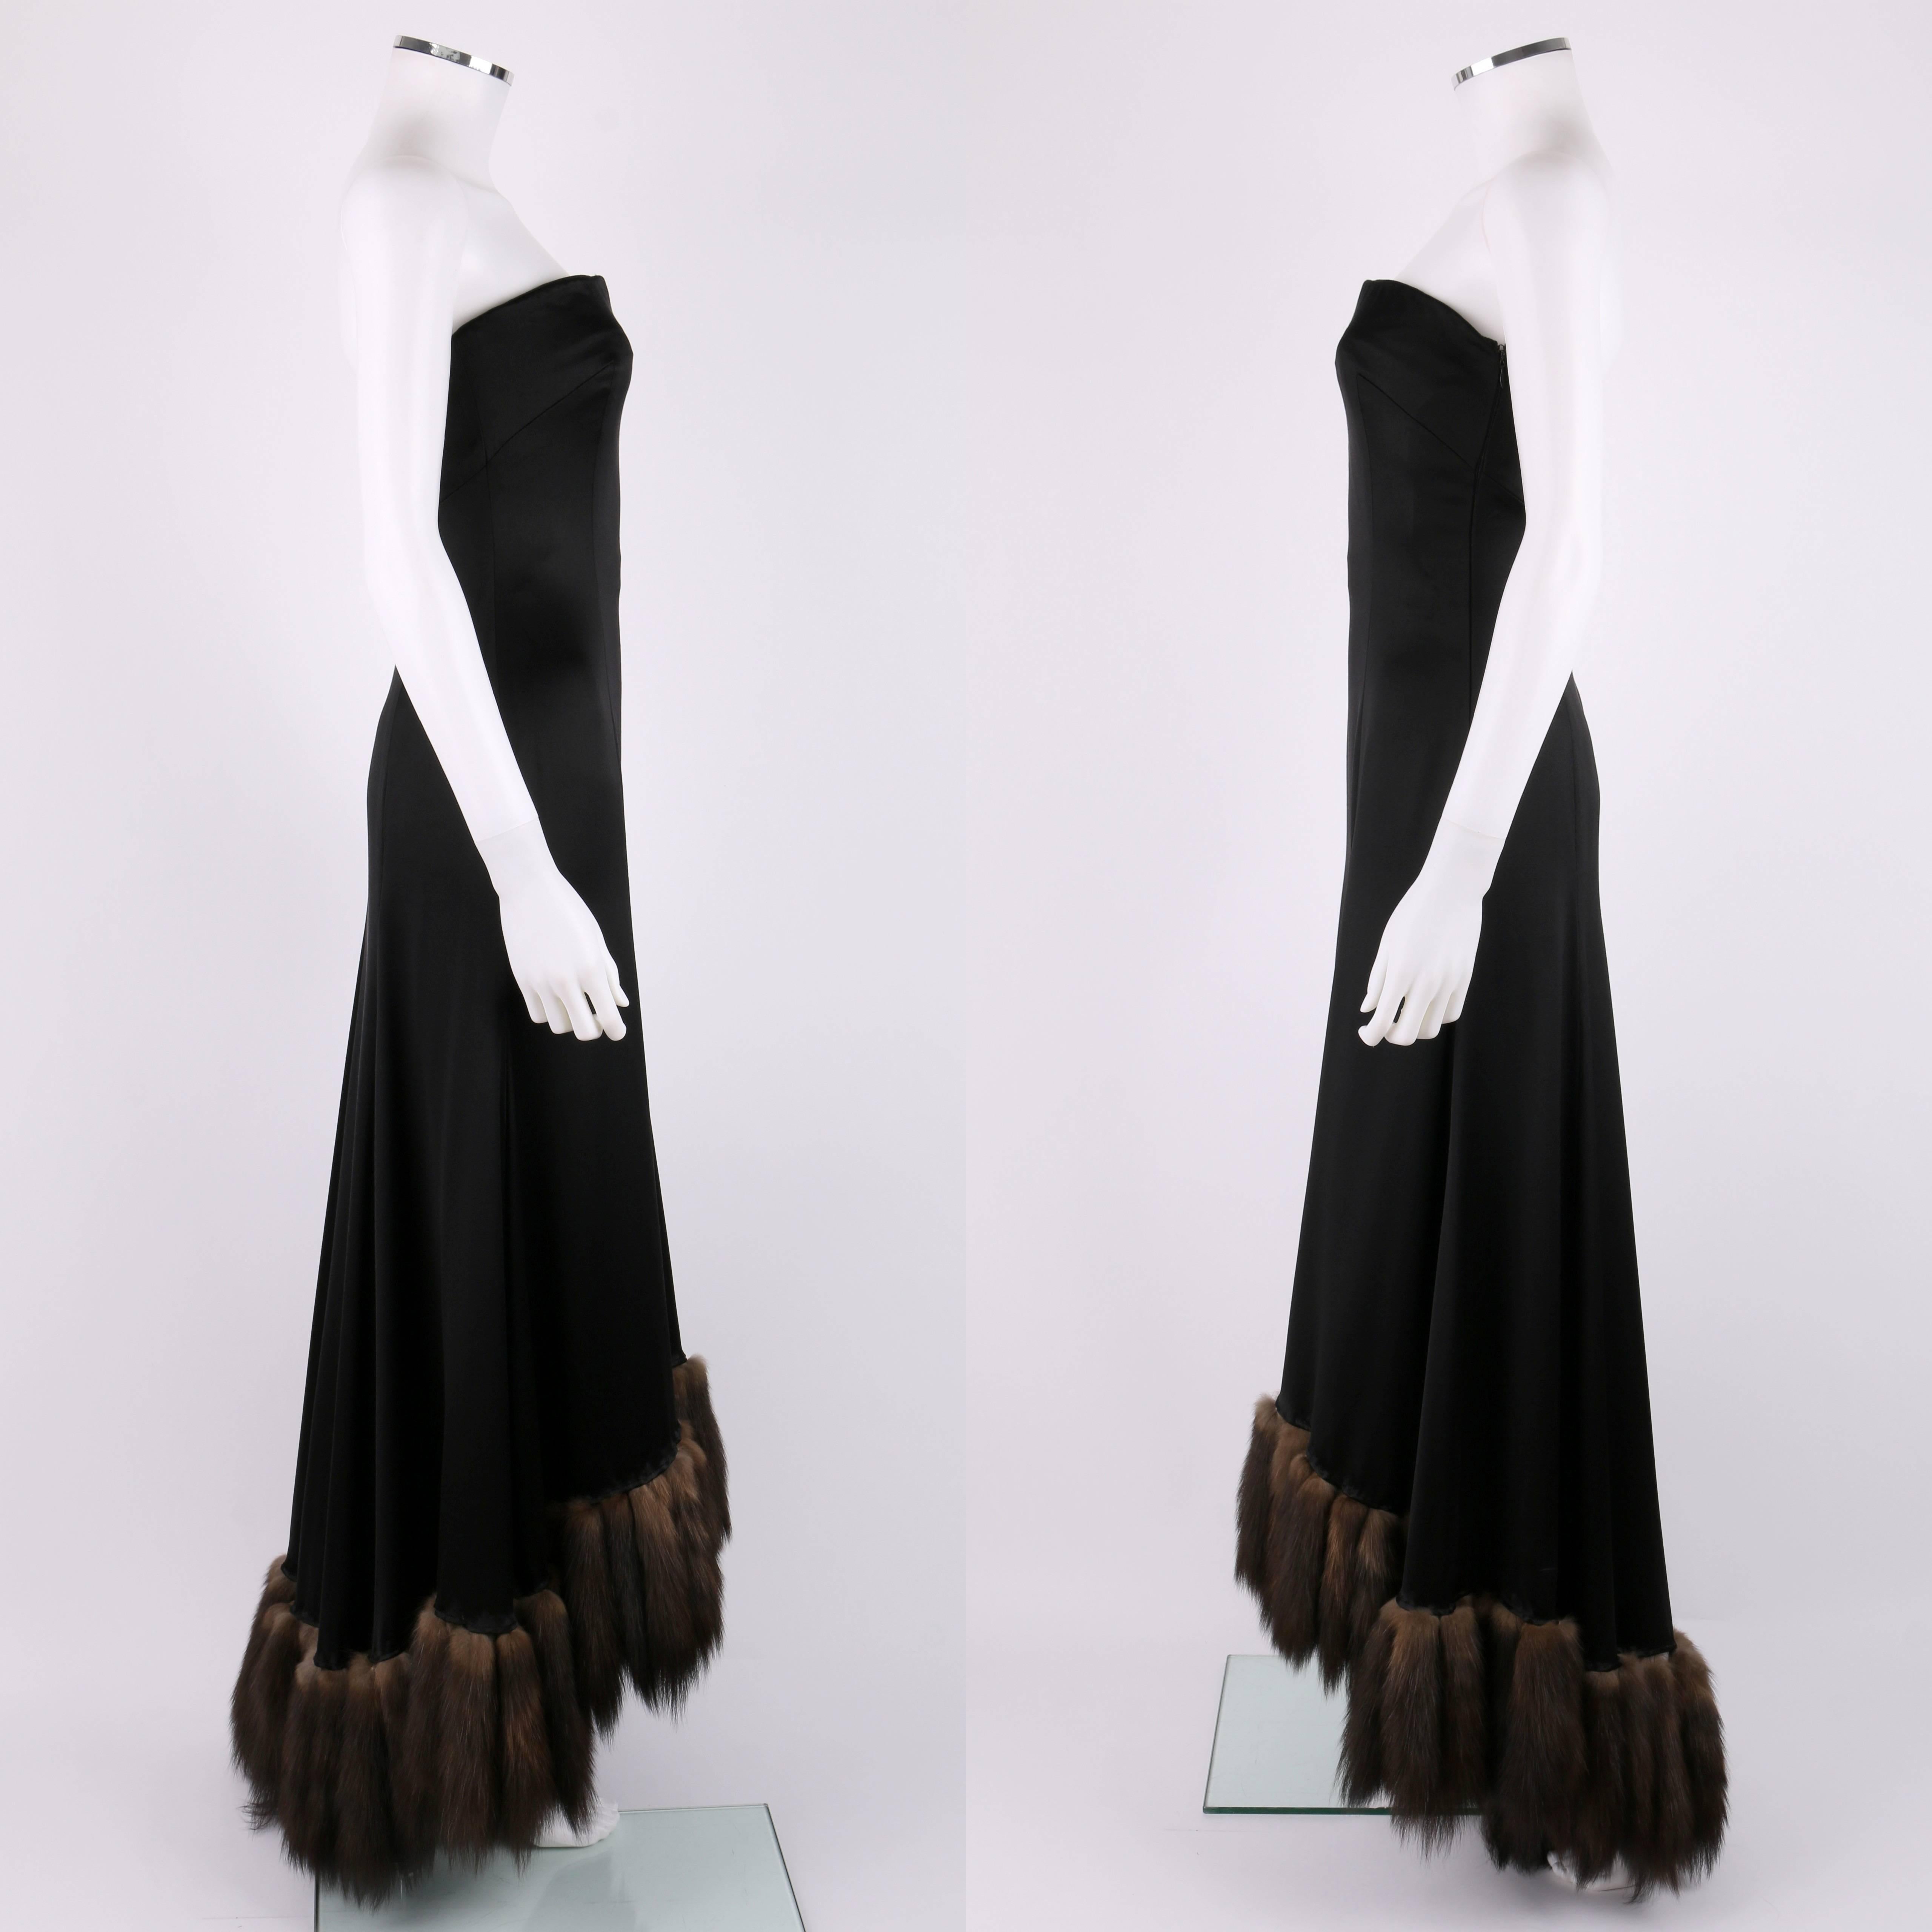 Women's J MENDEL Paris Black Satin Ball Gown Sable Fur Tail Trim Evening Dress XS = 0/2